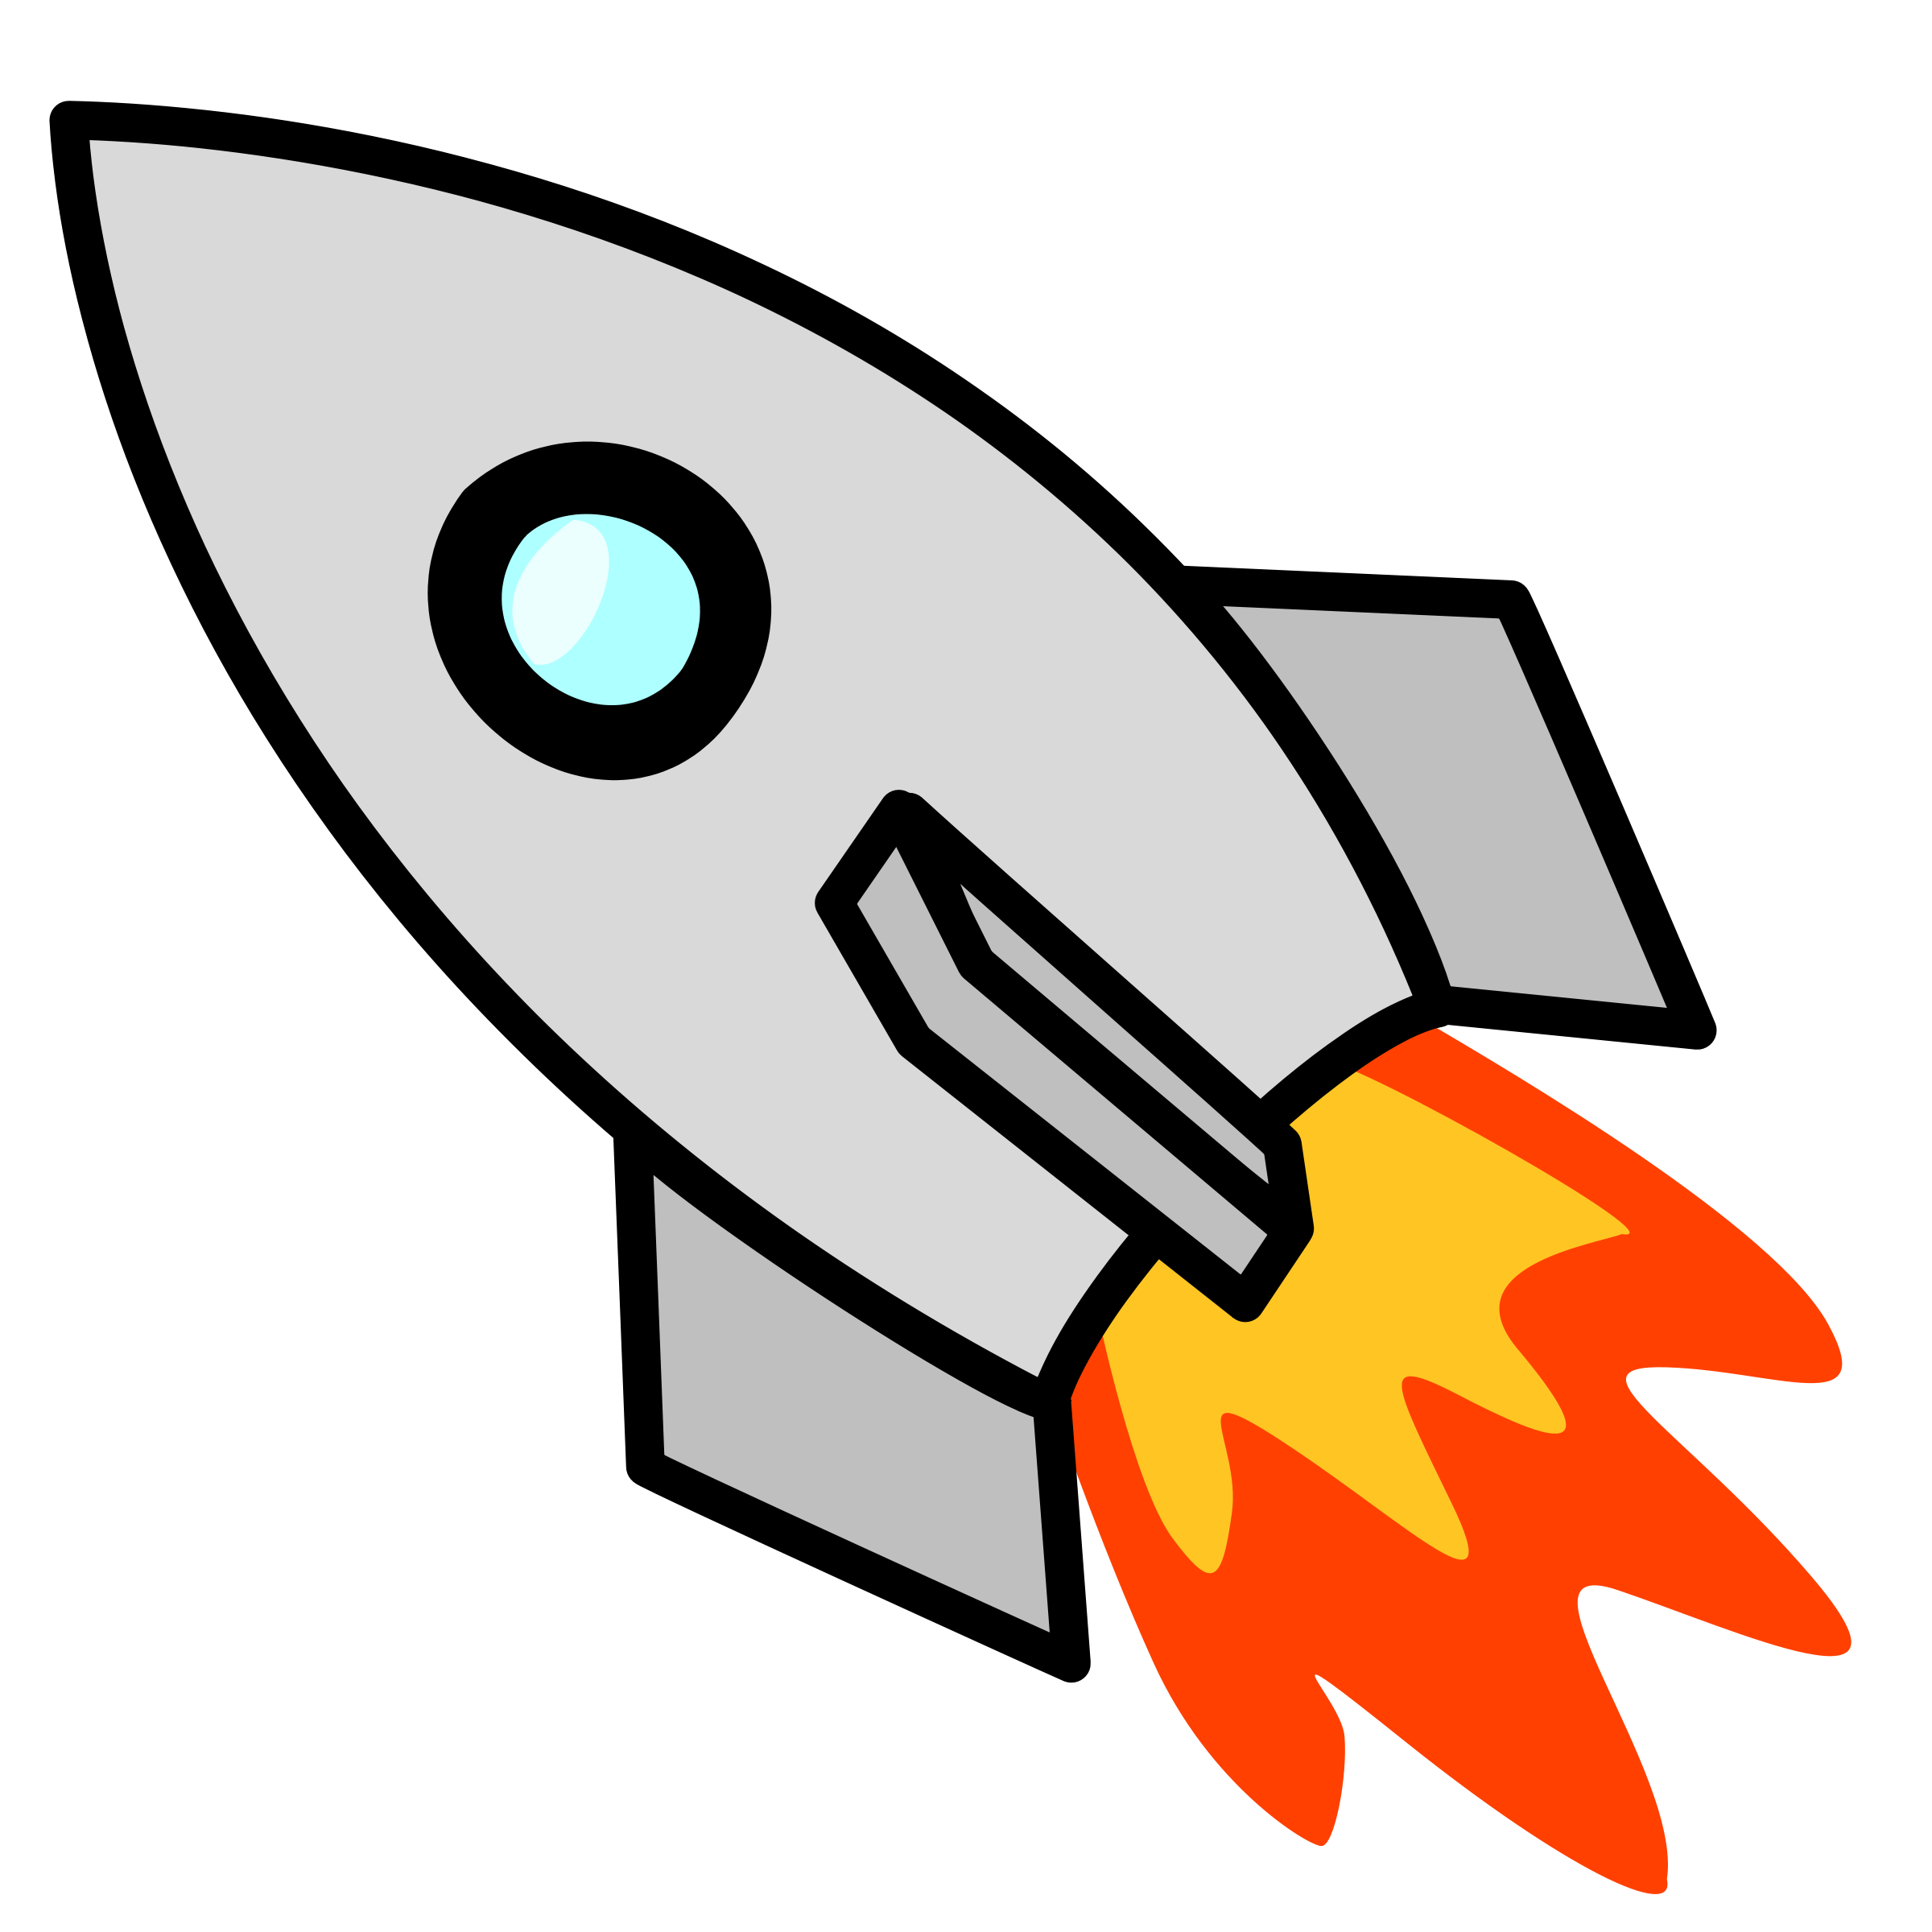 Space rocket clipart